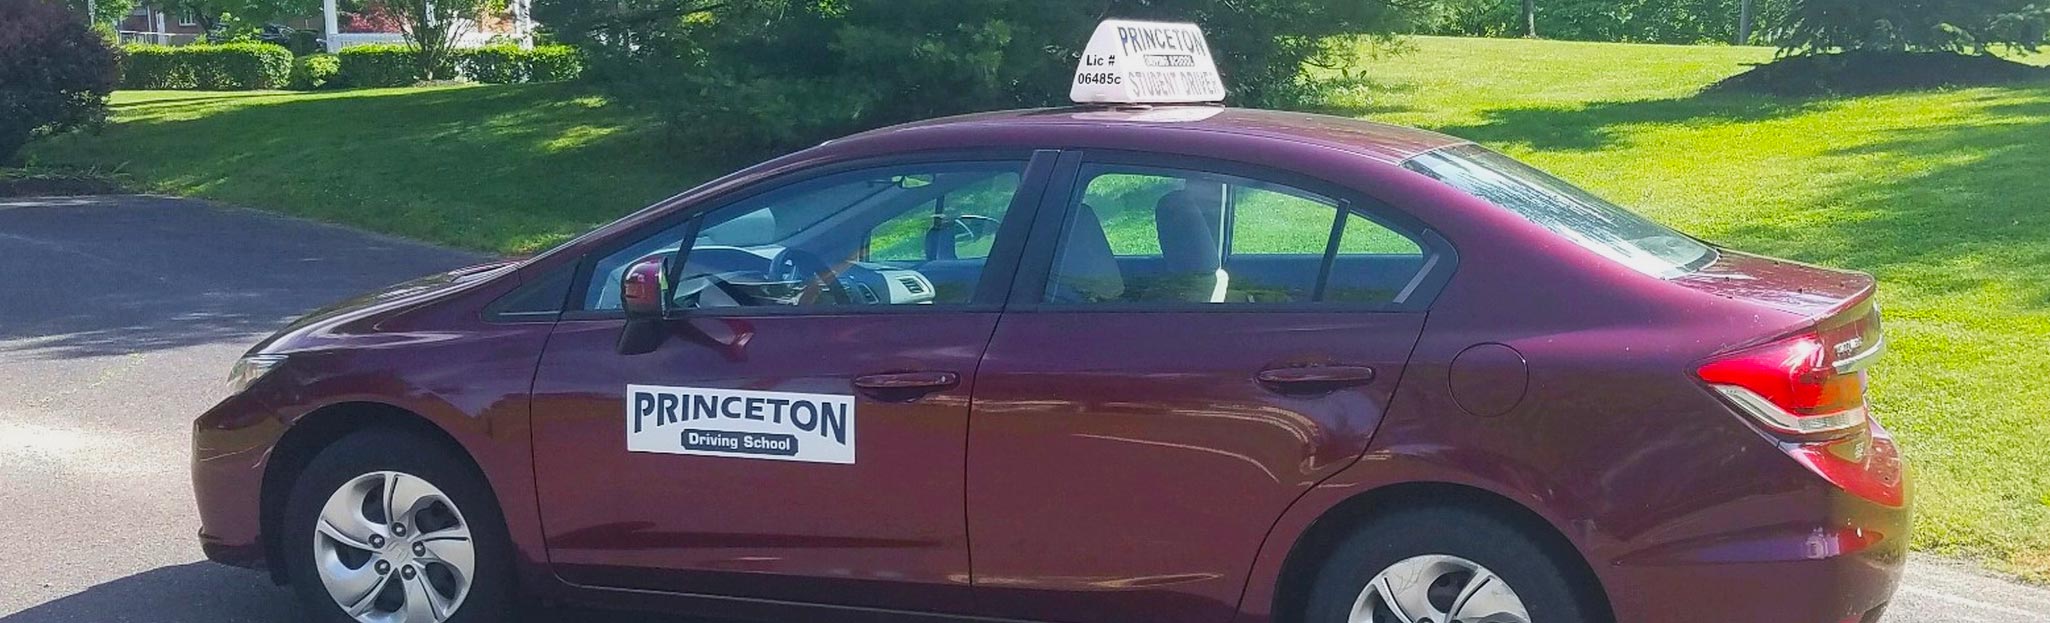 Princeton Driving School Seniors